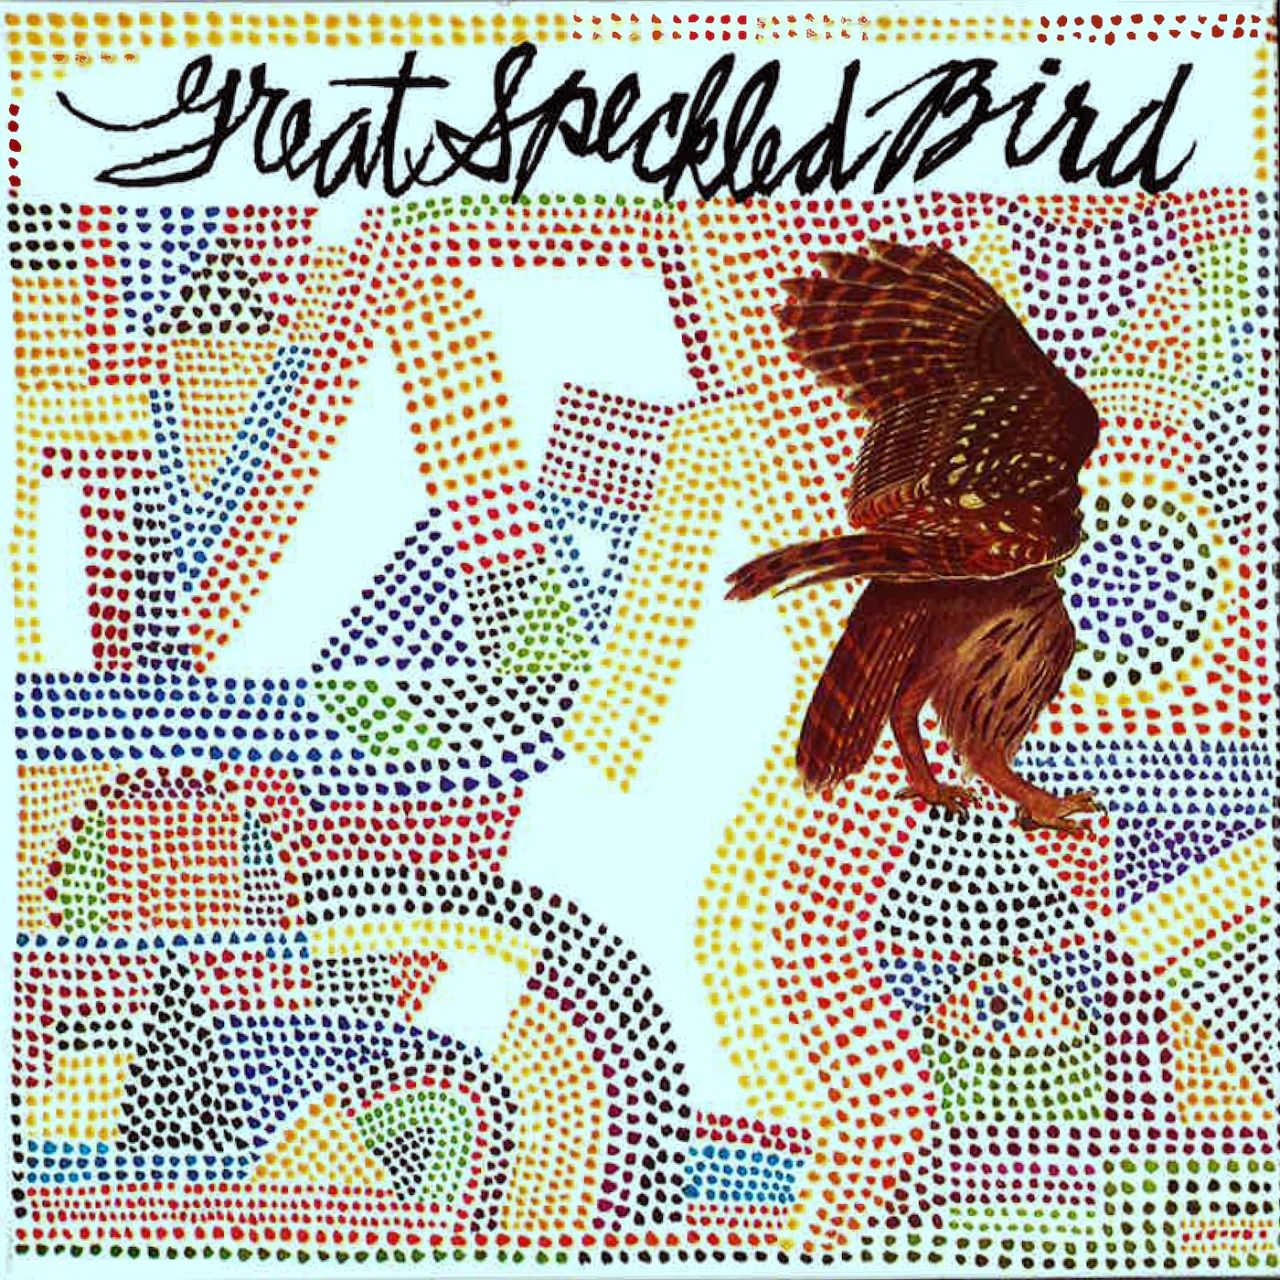 Great Speckled Bird - Great Speckled Bird cover album